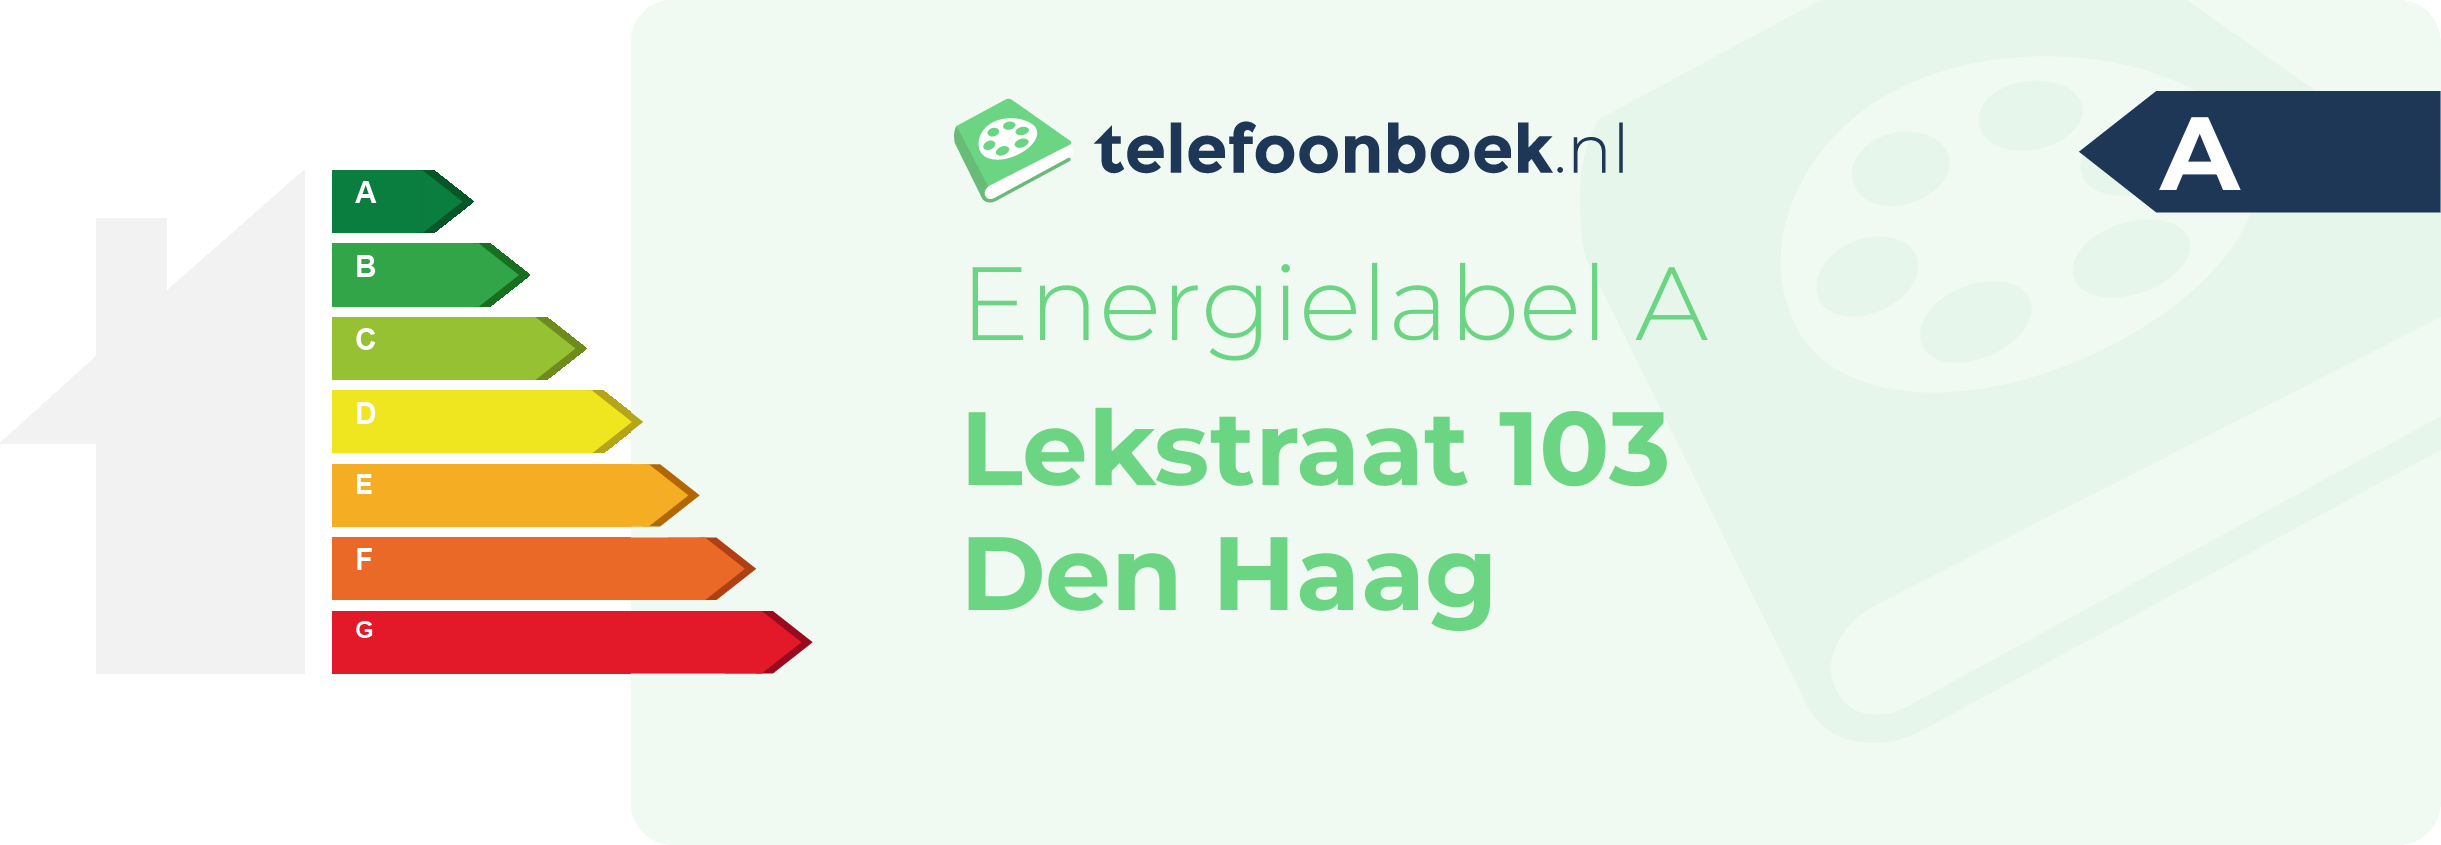 Energielabel Lekstraat 103 Den Haag